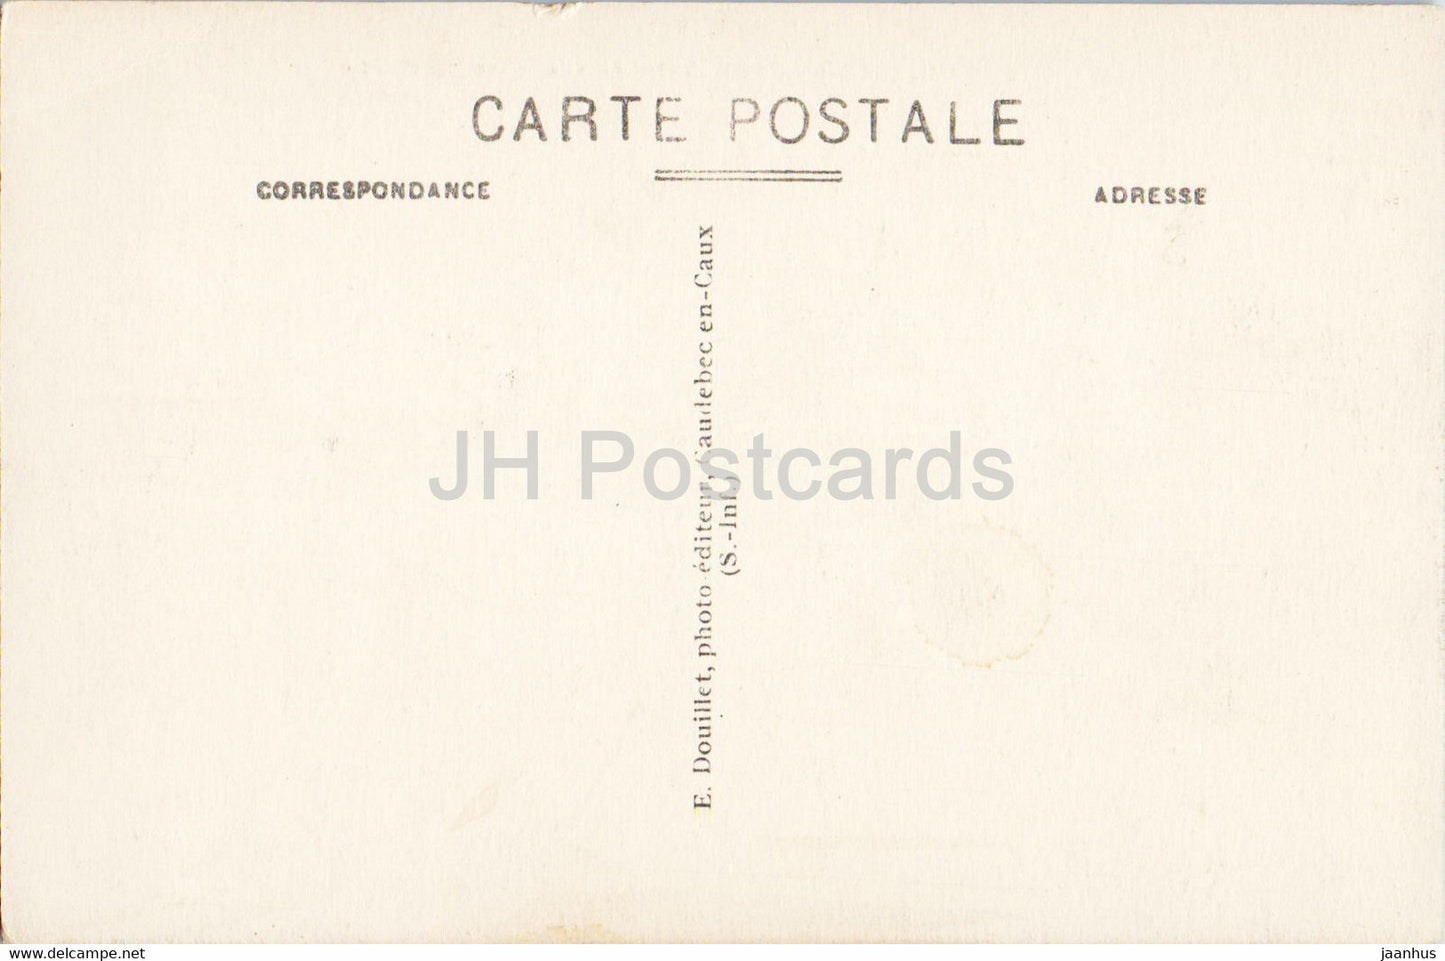 Caudebec en Caux - Vue prise du Calidu - 15 - old postcard - France - unused